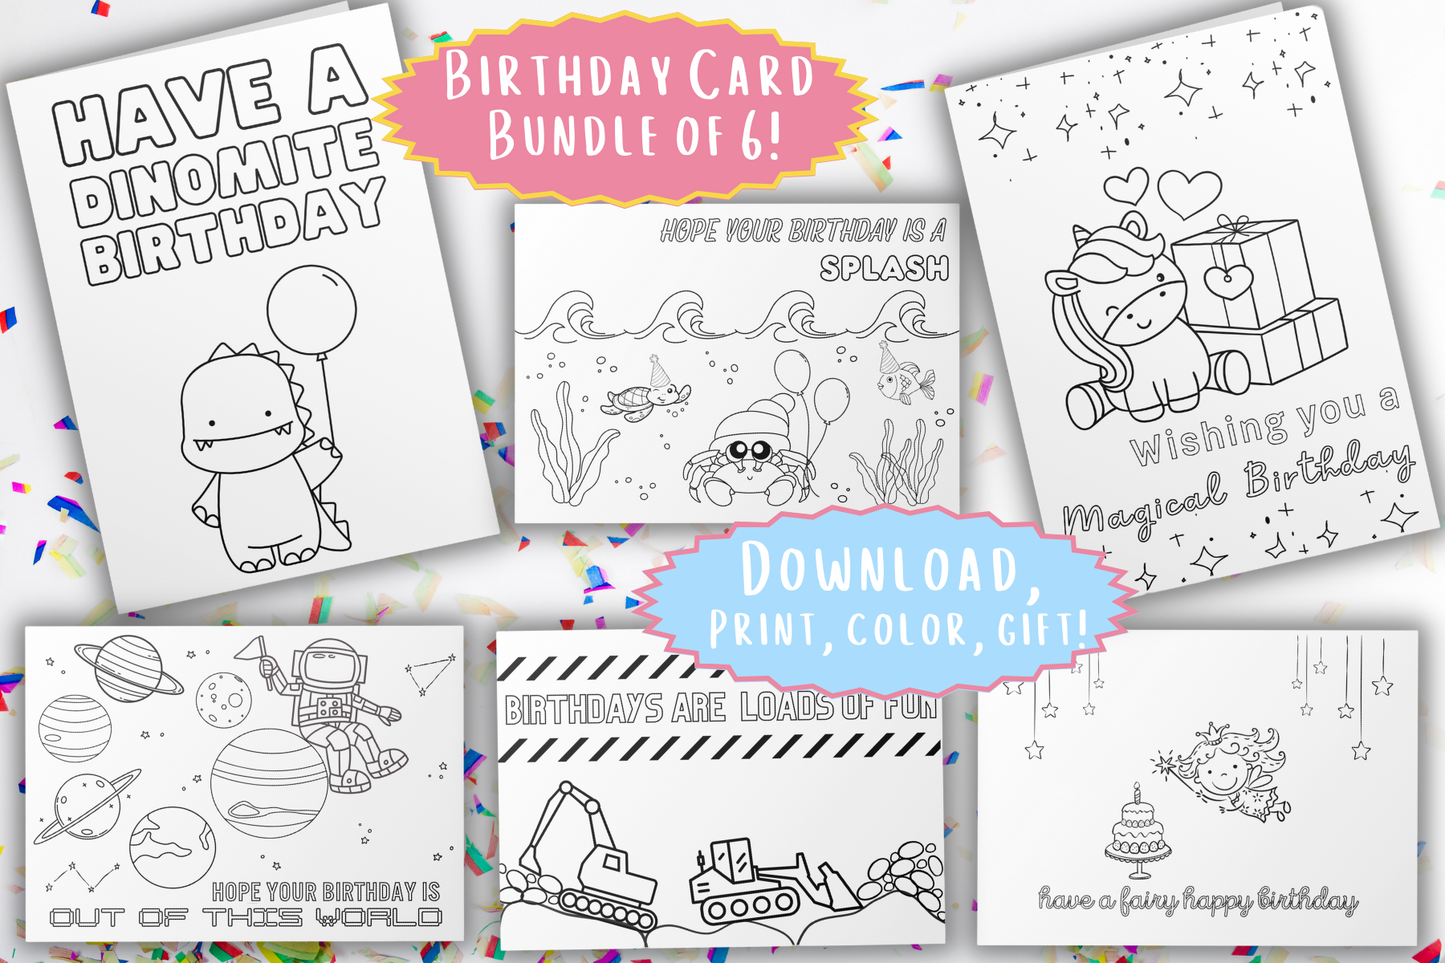 6 Themed Birthday Card Bundle | Digital Download